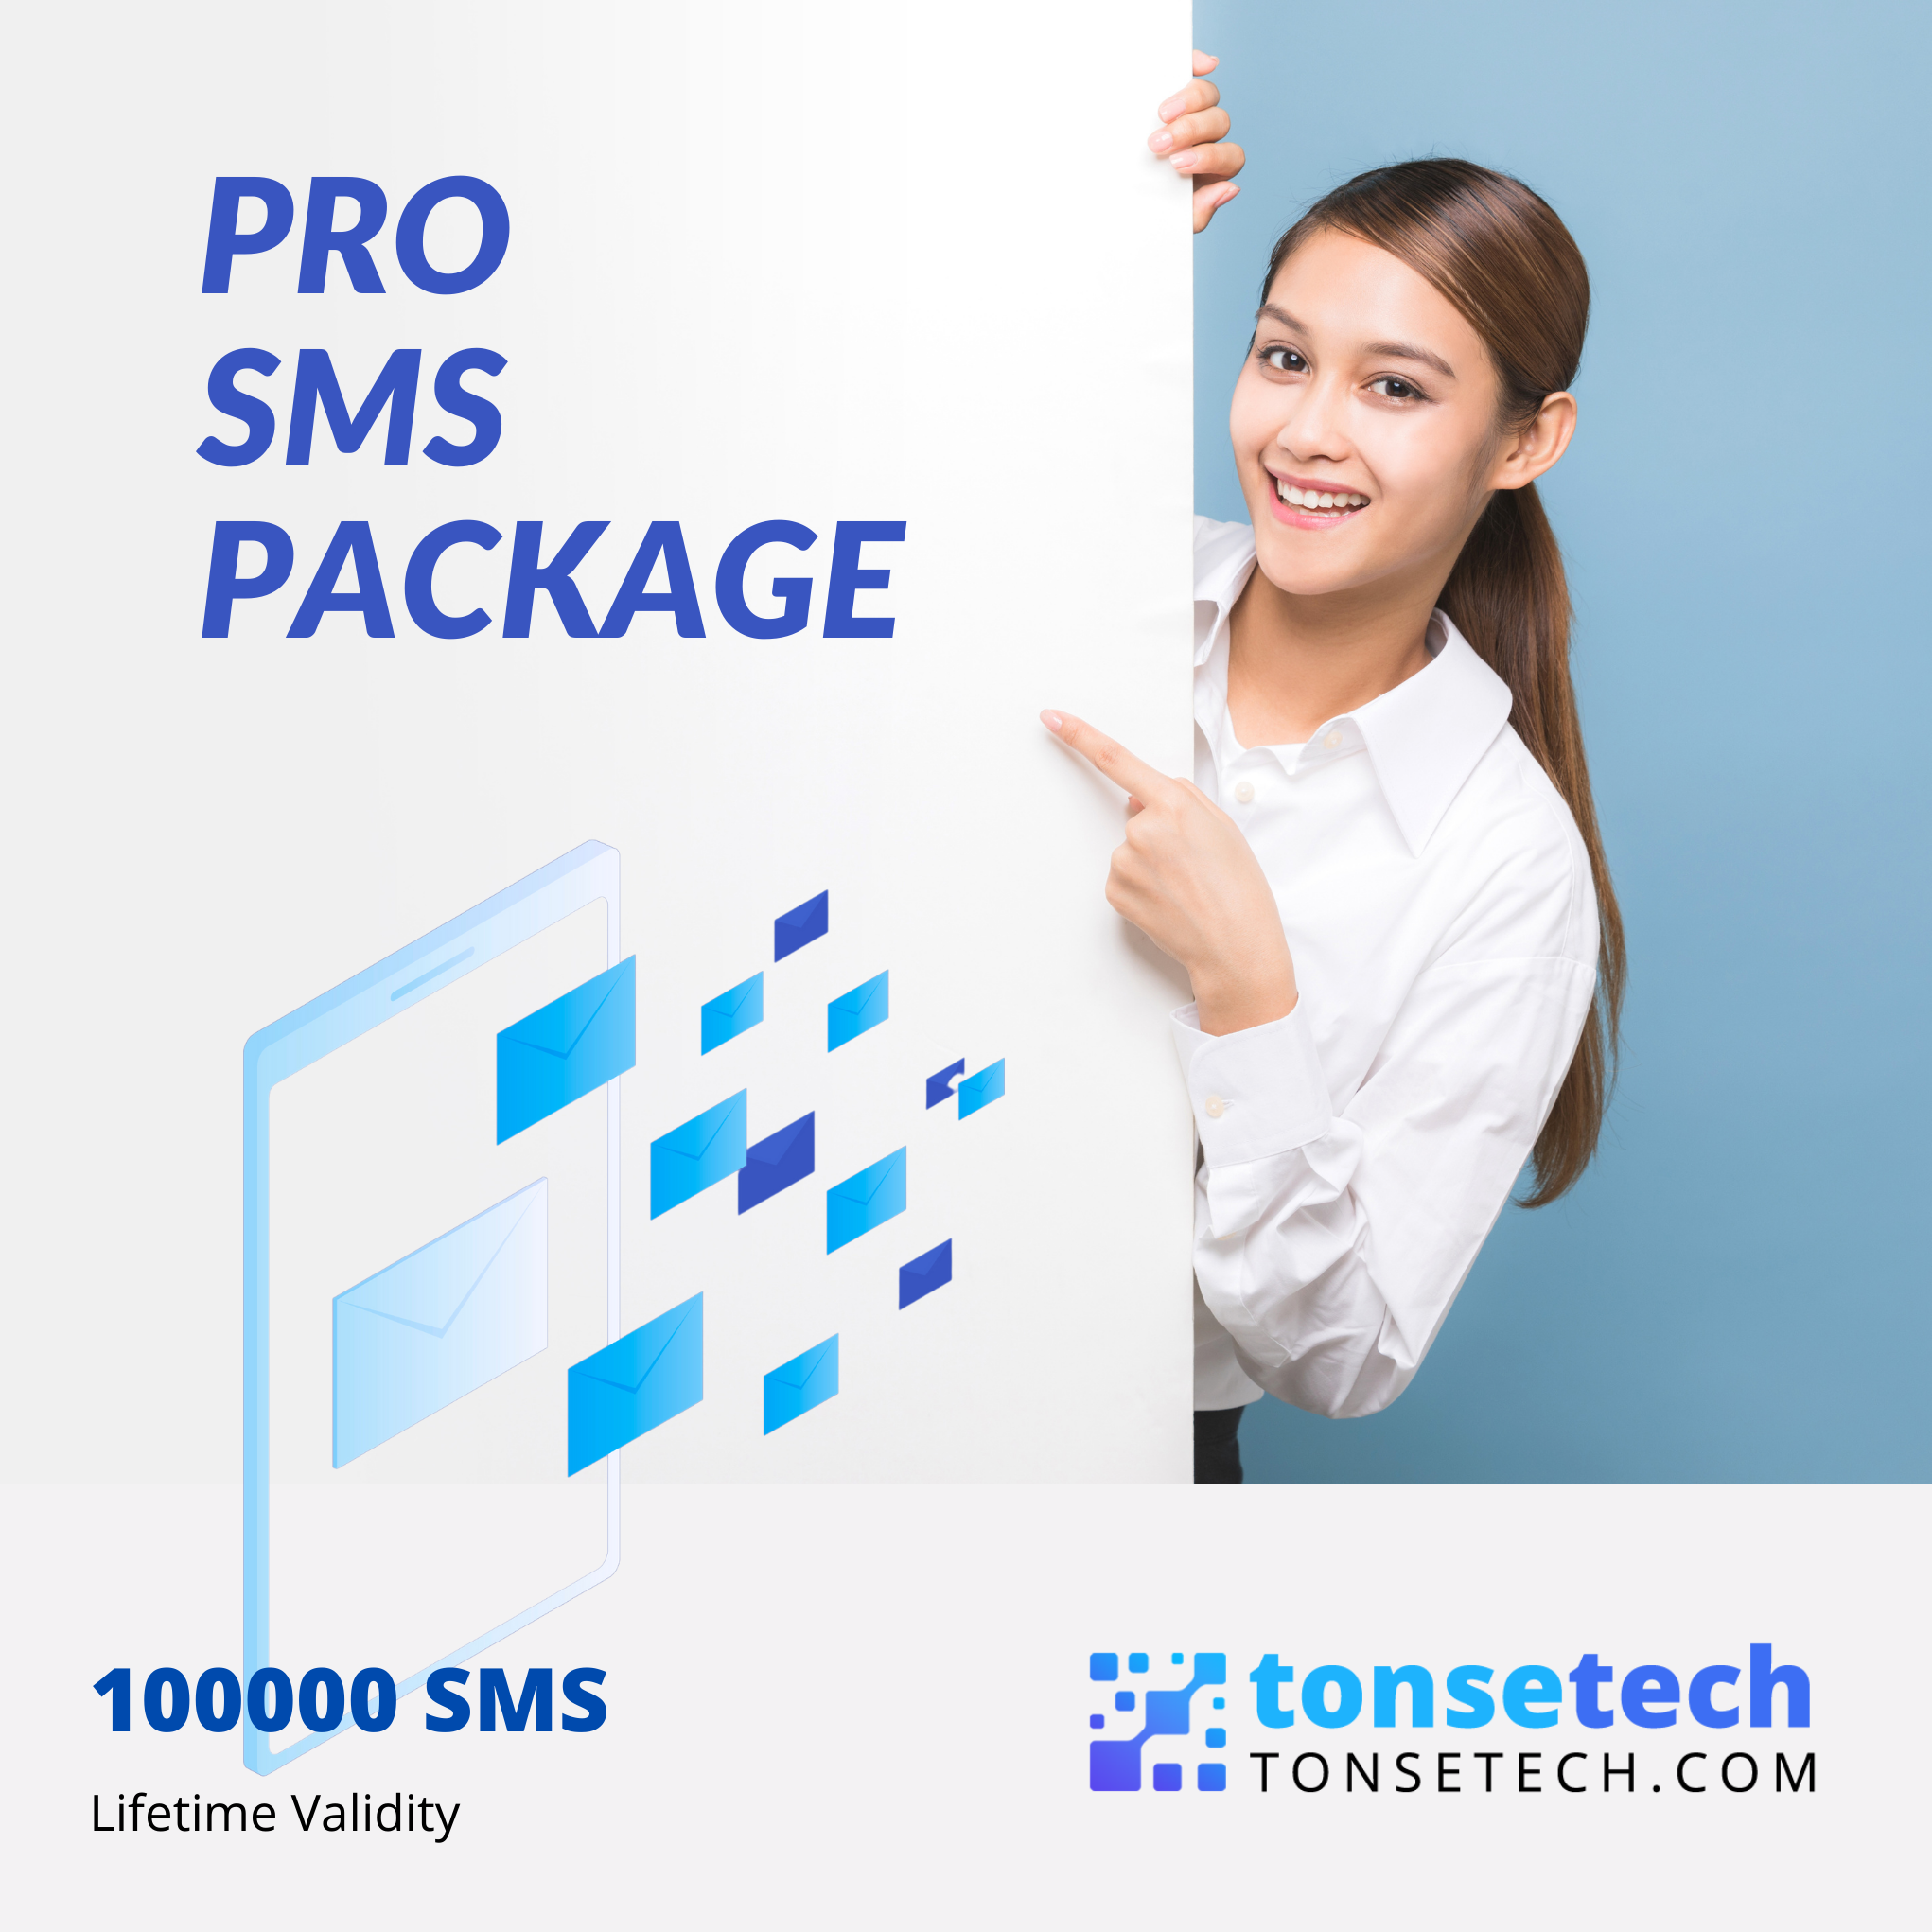 Pro SMS Package - KSA